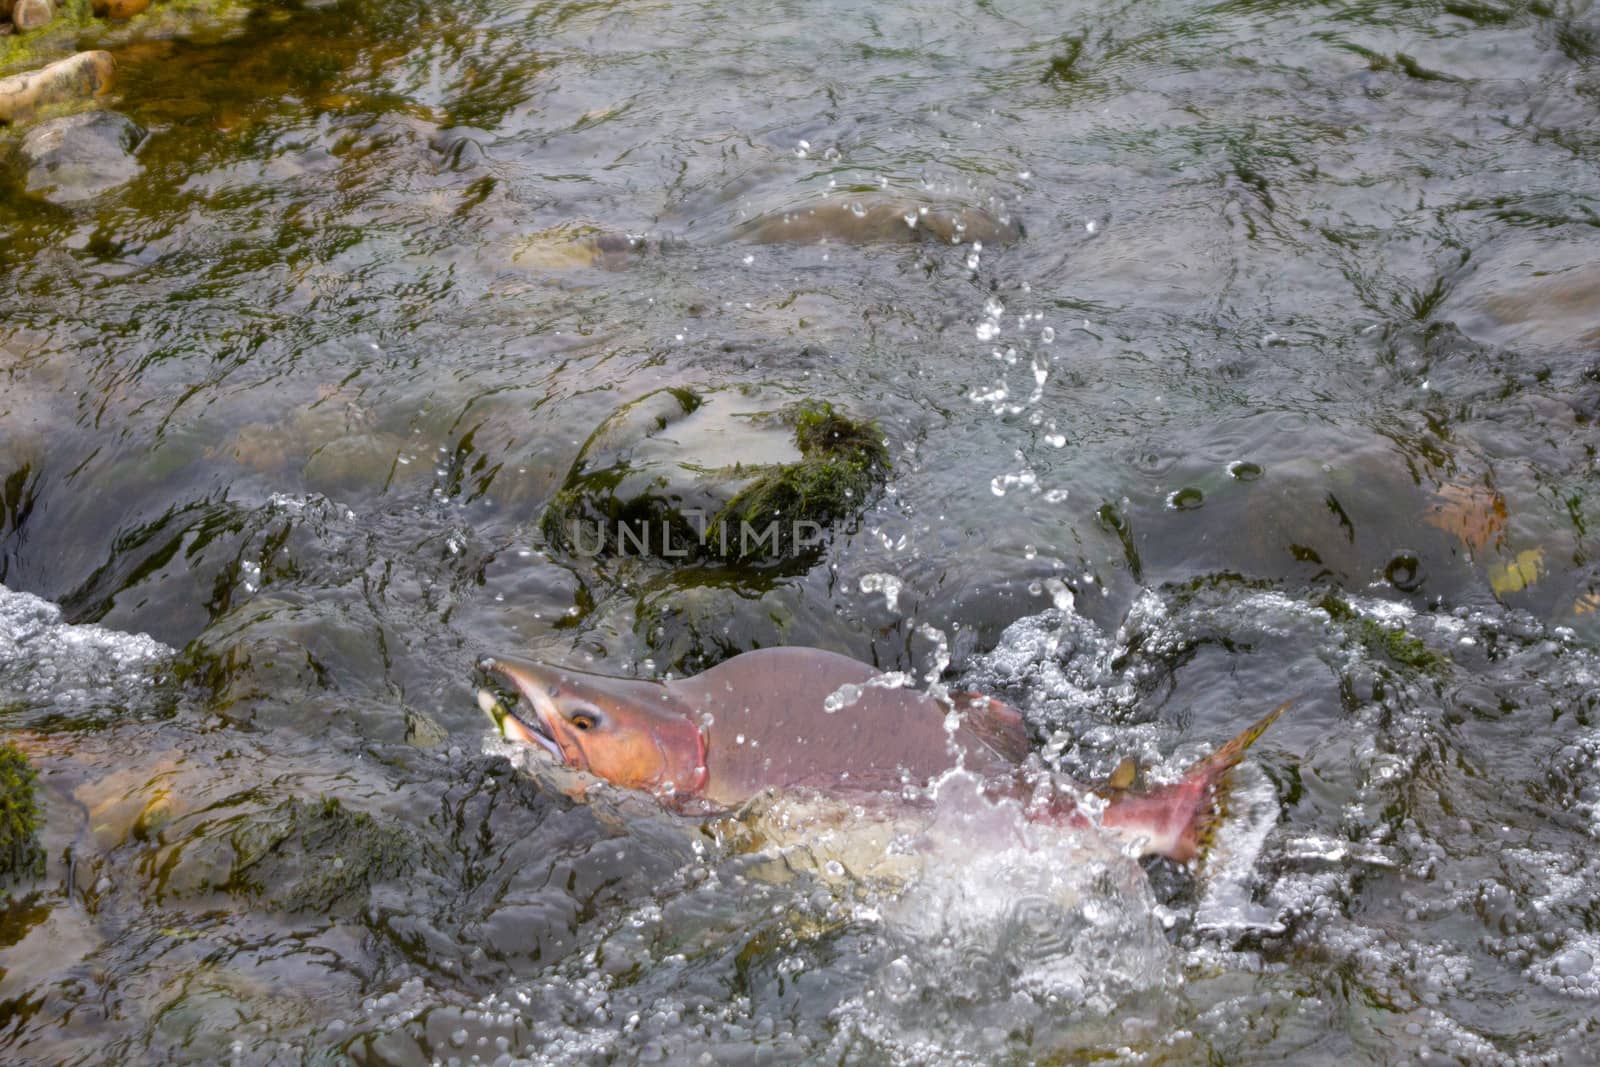 humpback salmon by max51288